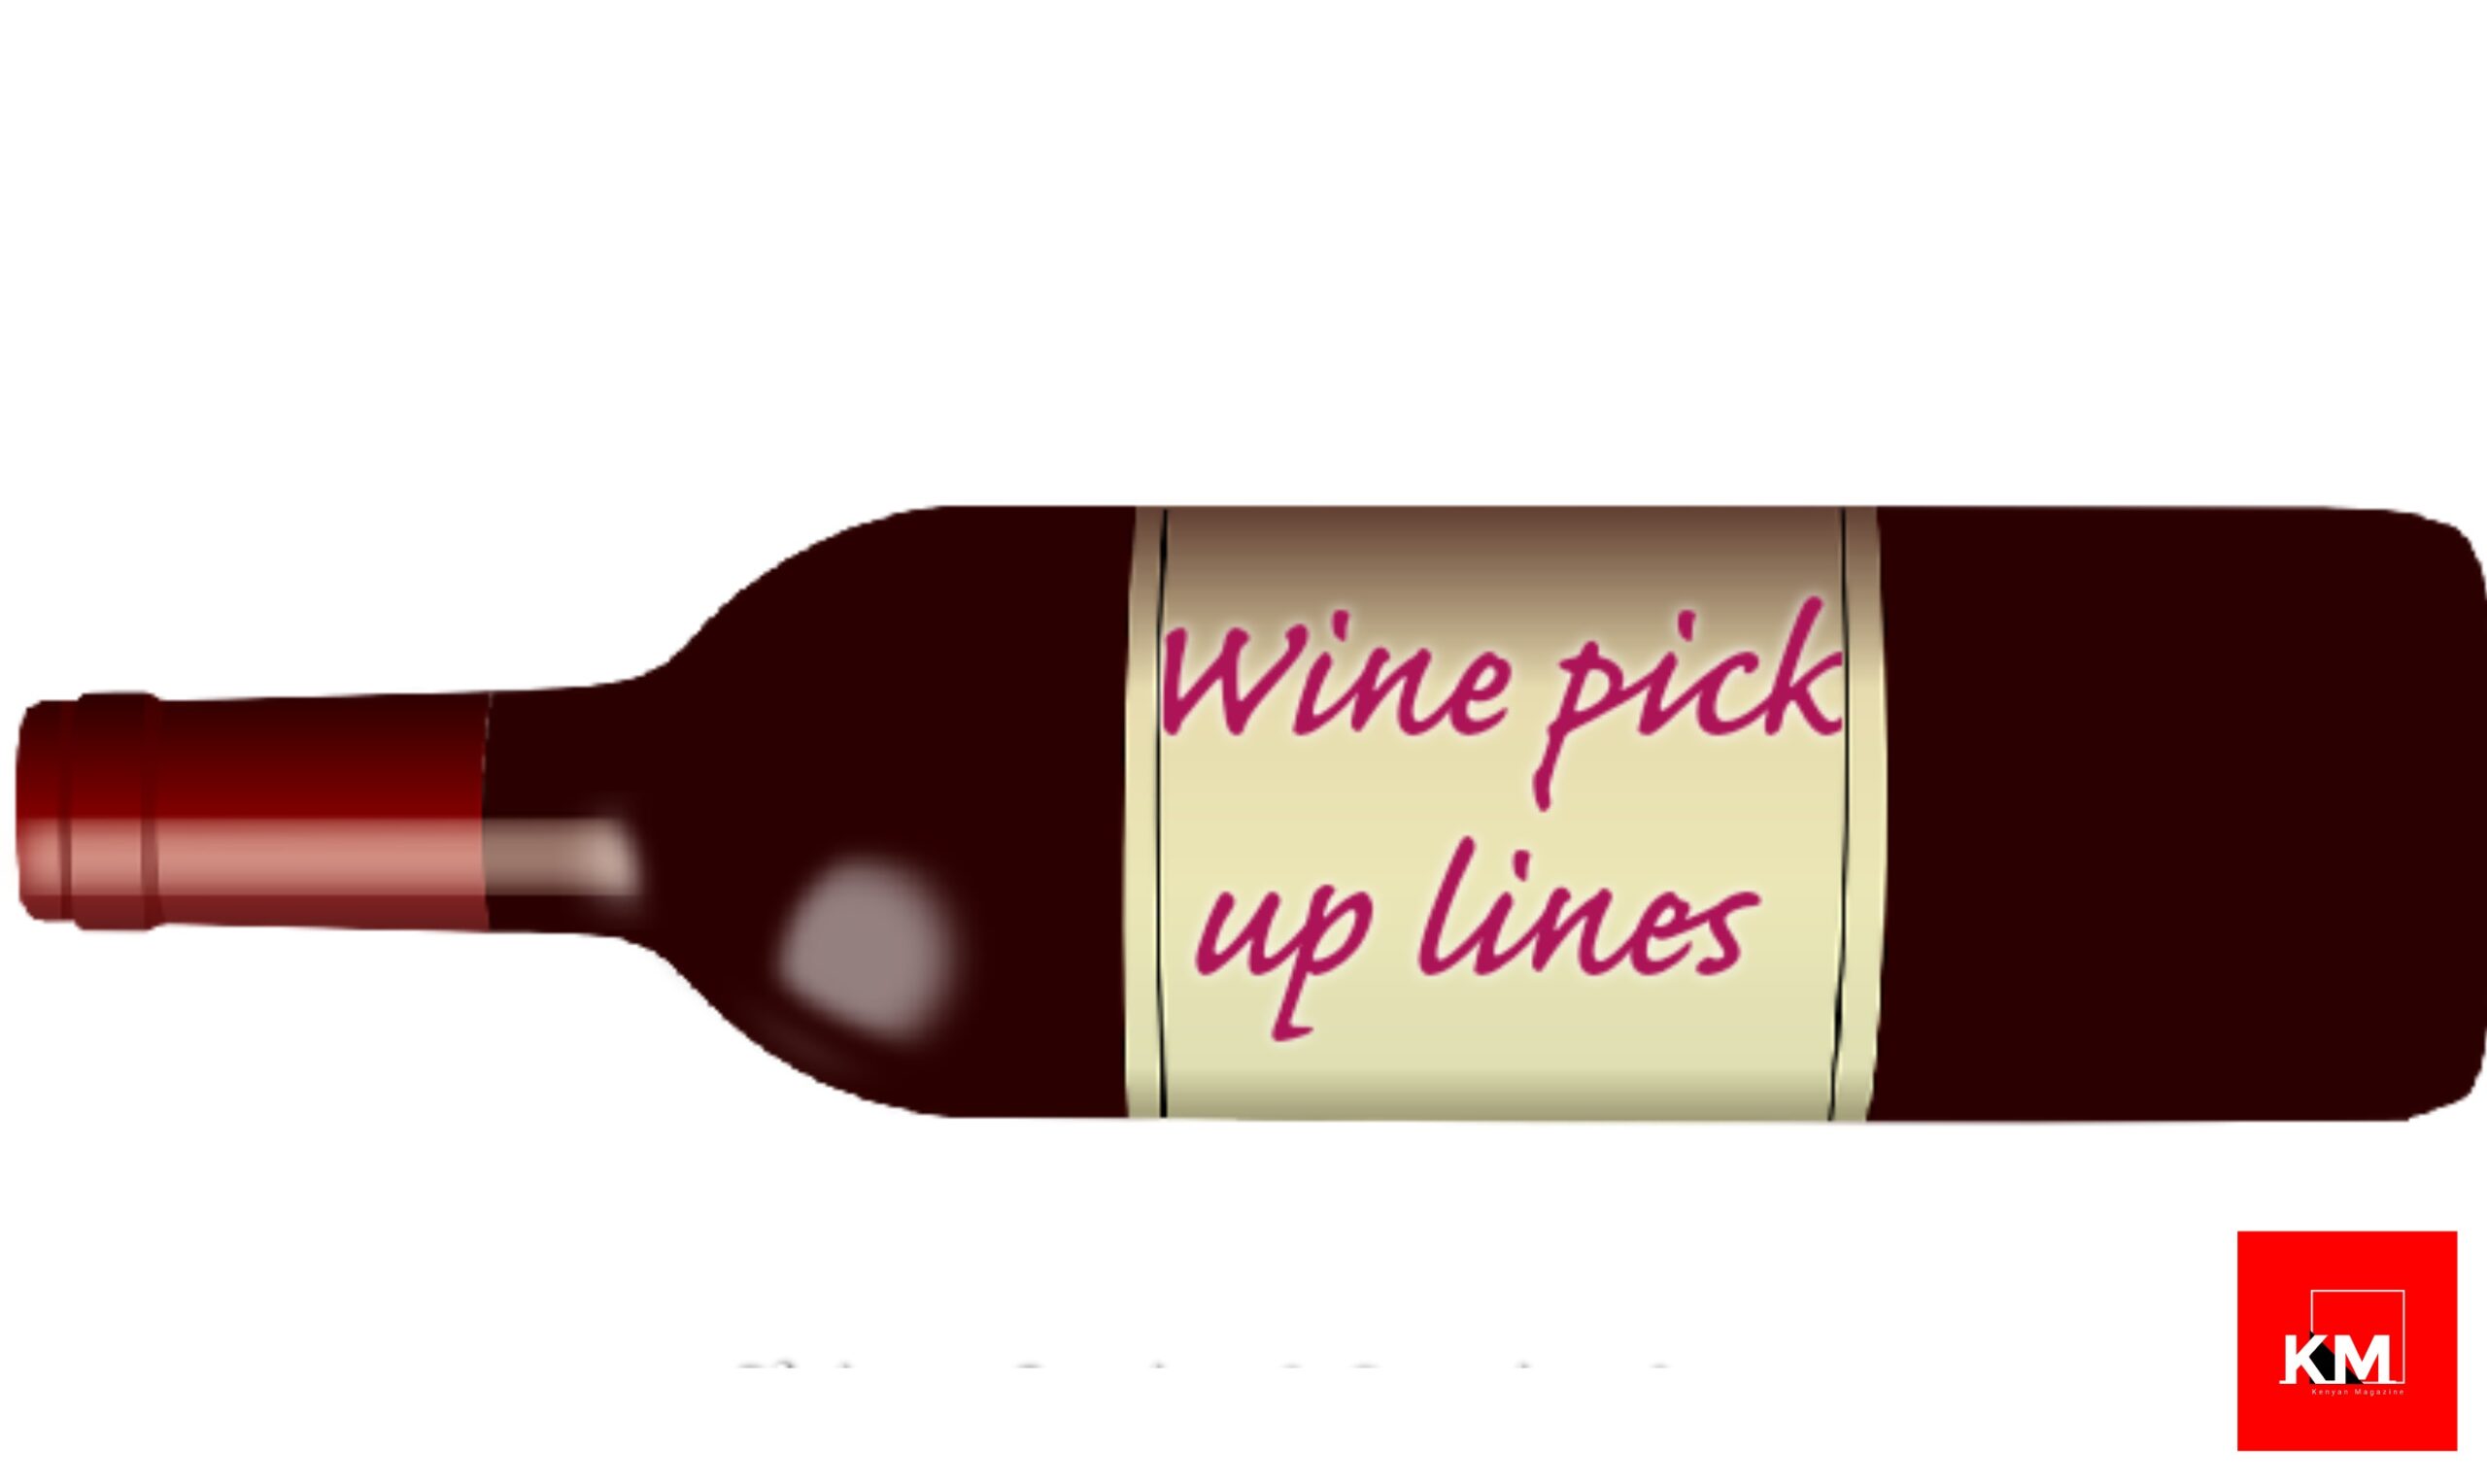 Wine pick up lines